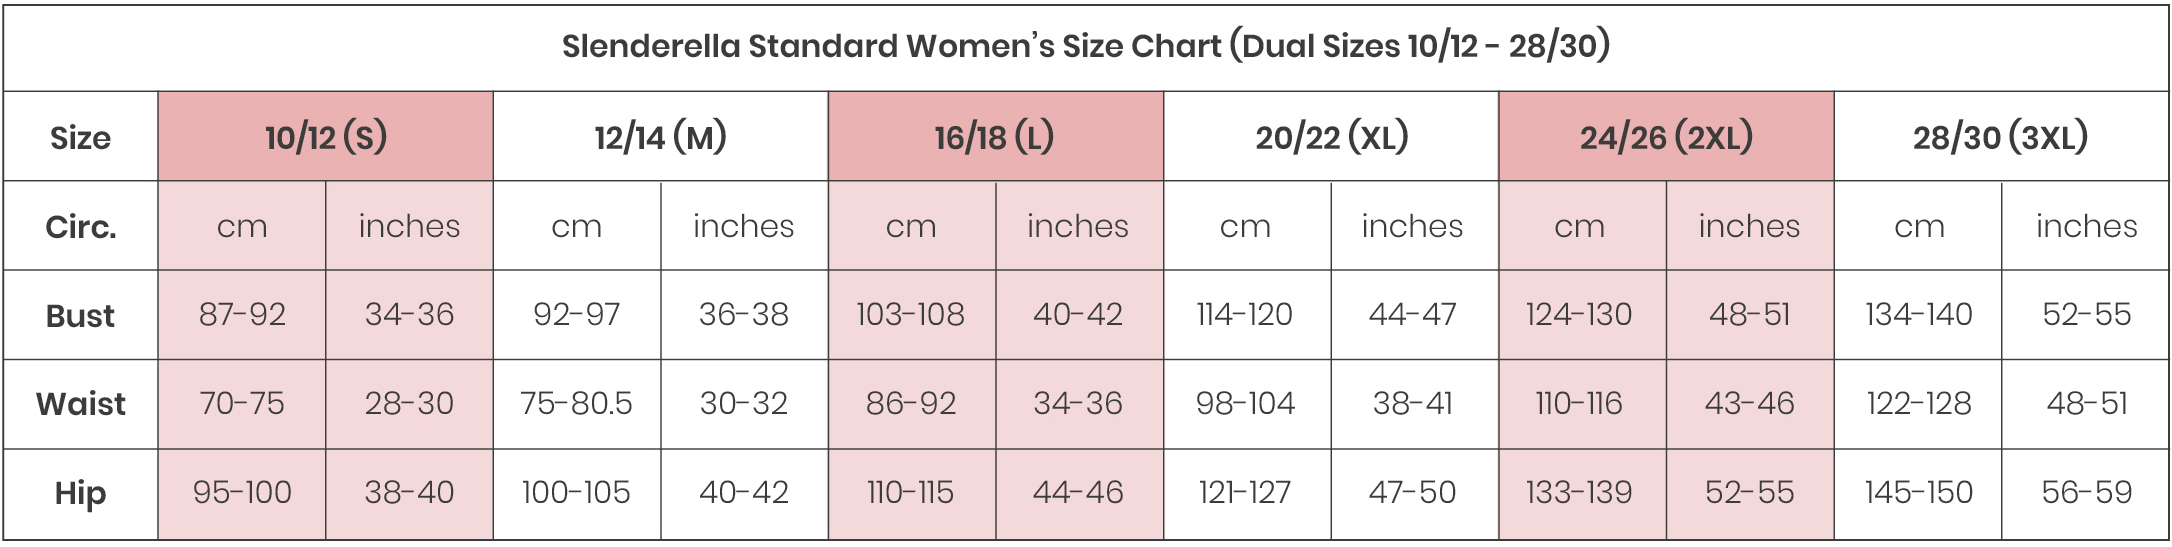 Bra Size Chart India – Explore the List of Bra Sizes